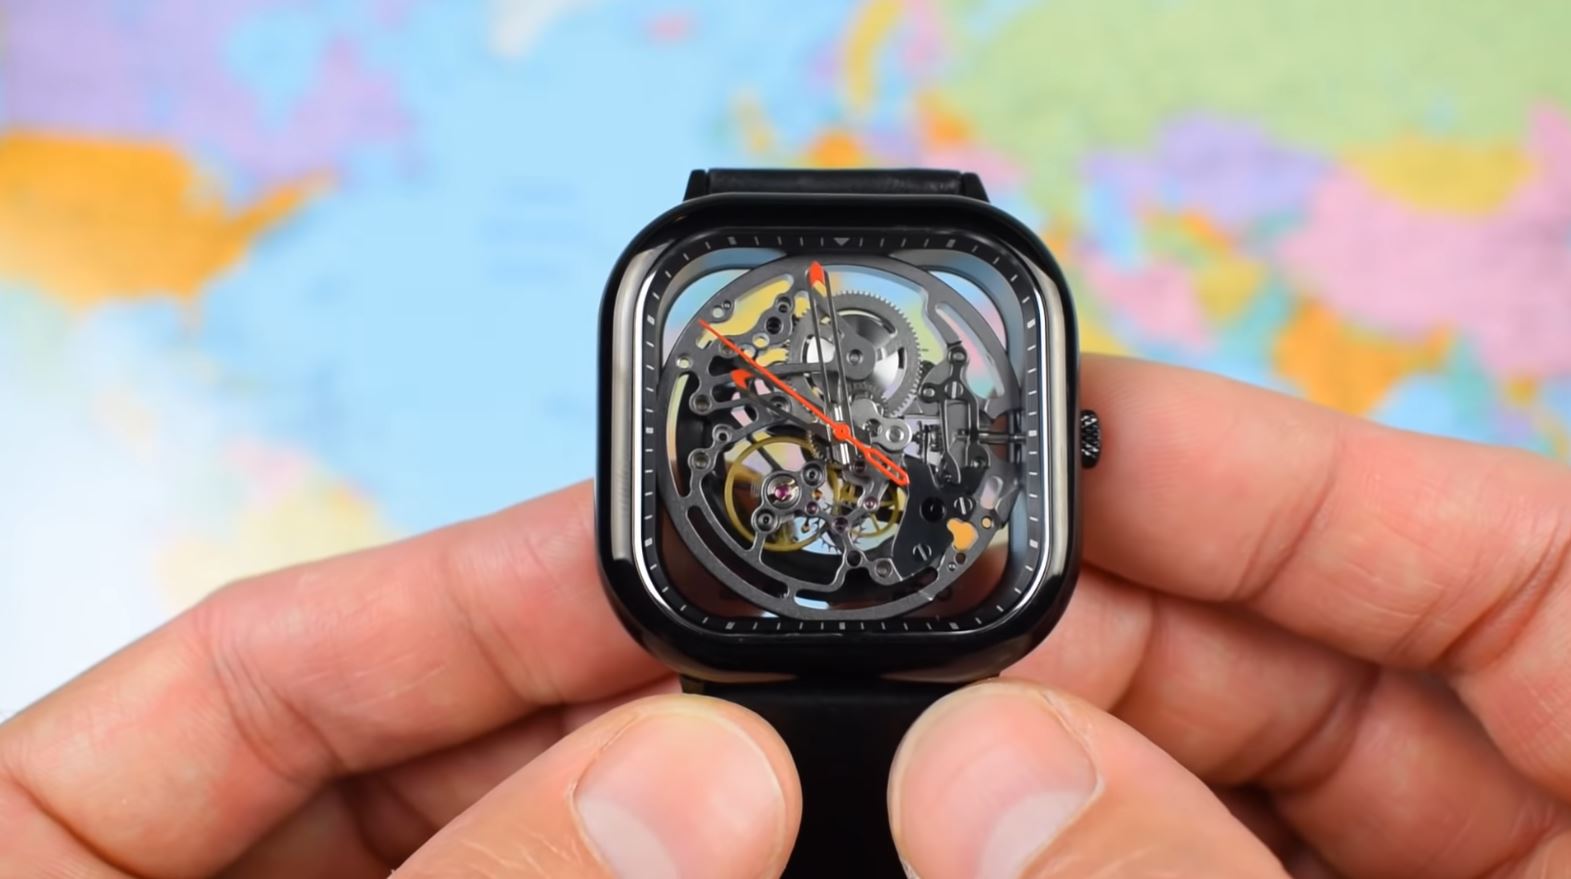 Xiaomi CIGA Design Automatic Mechanical Watch Review - Featured